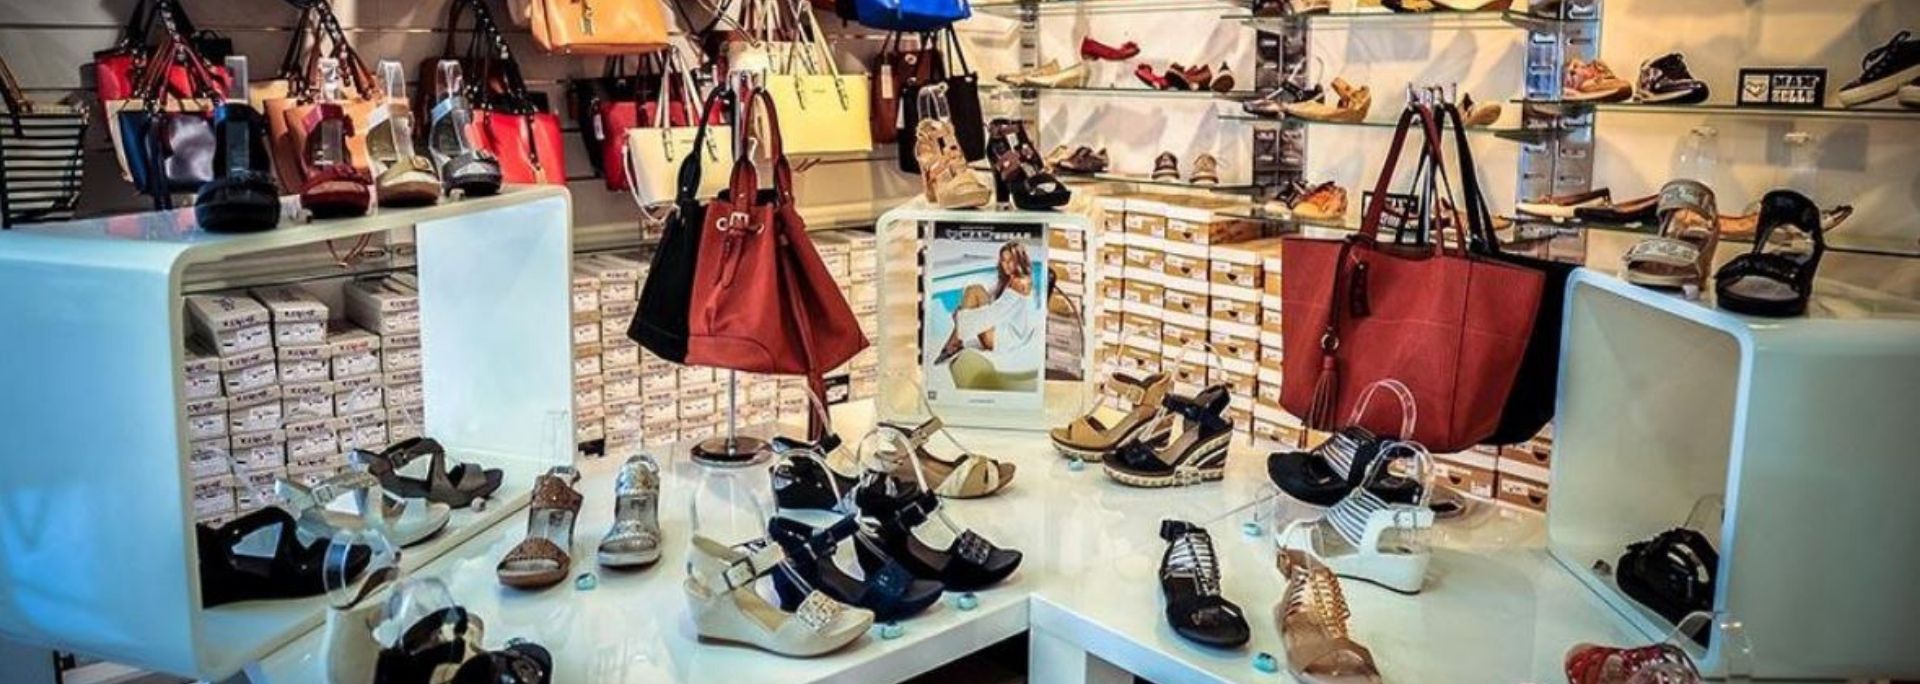 Chaussures Boutin – Bayonne Shopping – Bayonne